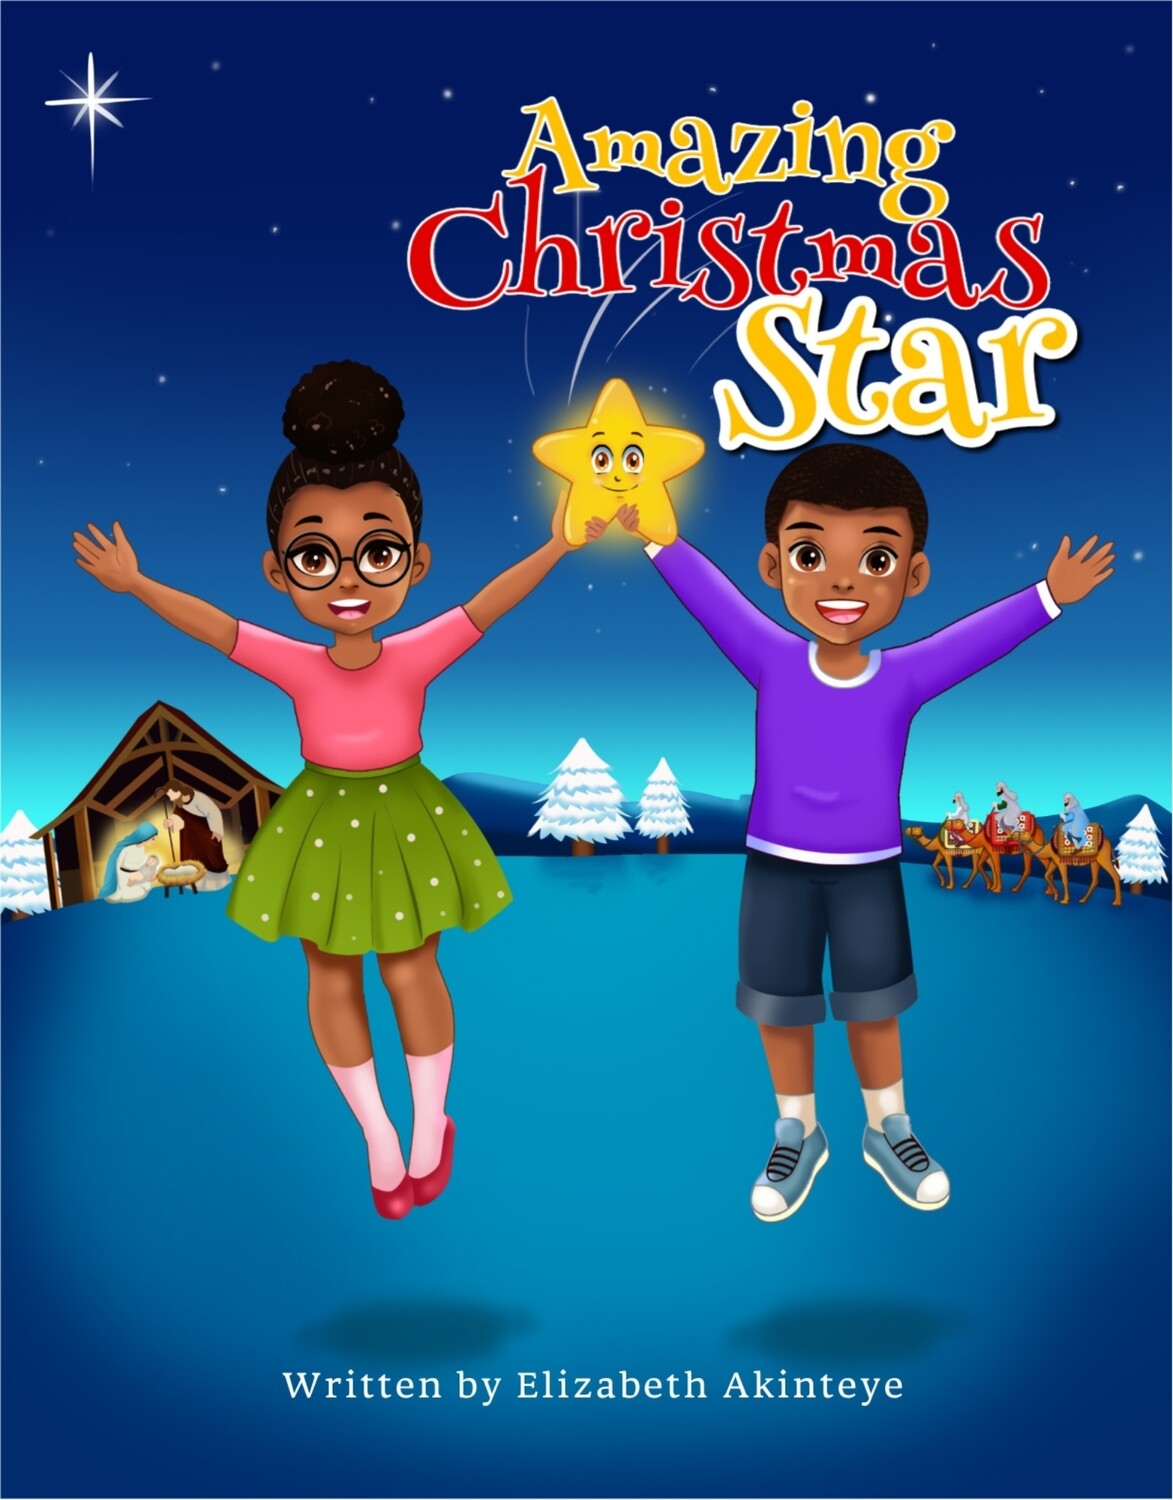 Children's Christmas Book: Amazing Christmas Star- ISBN 978-1916057449